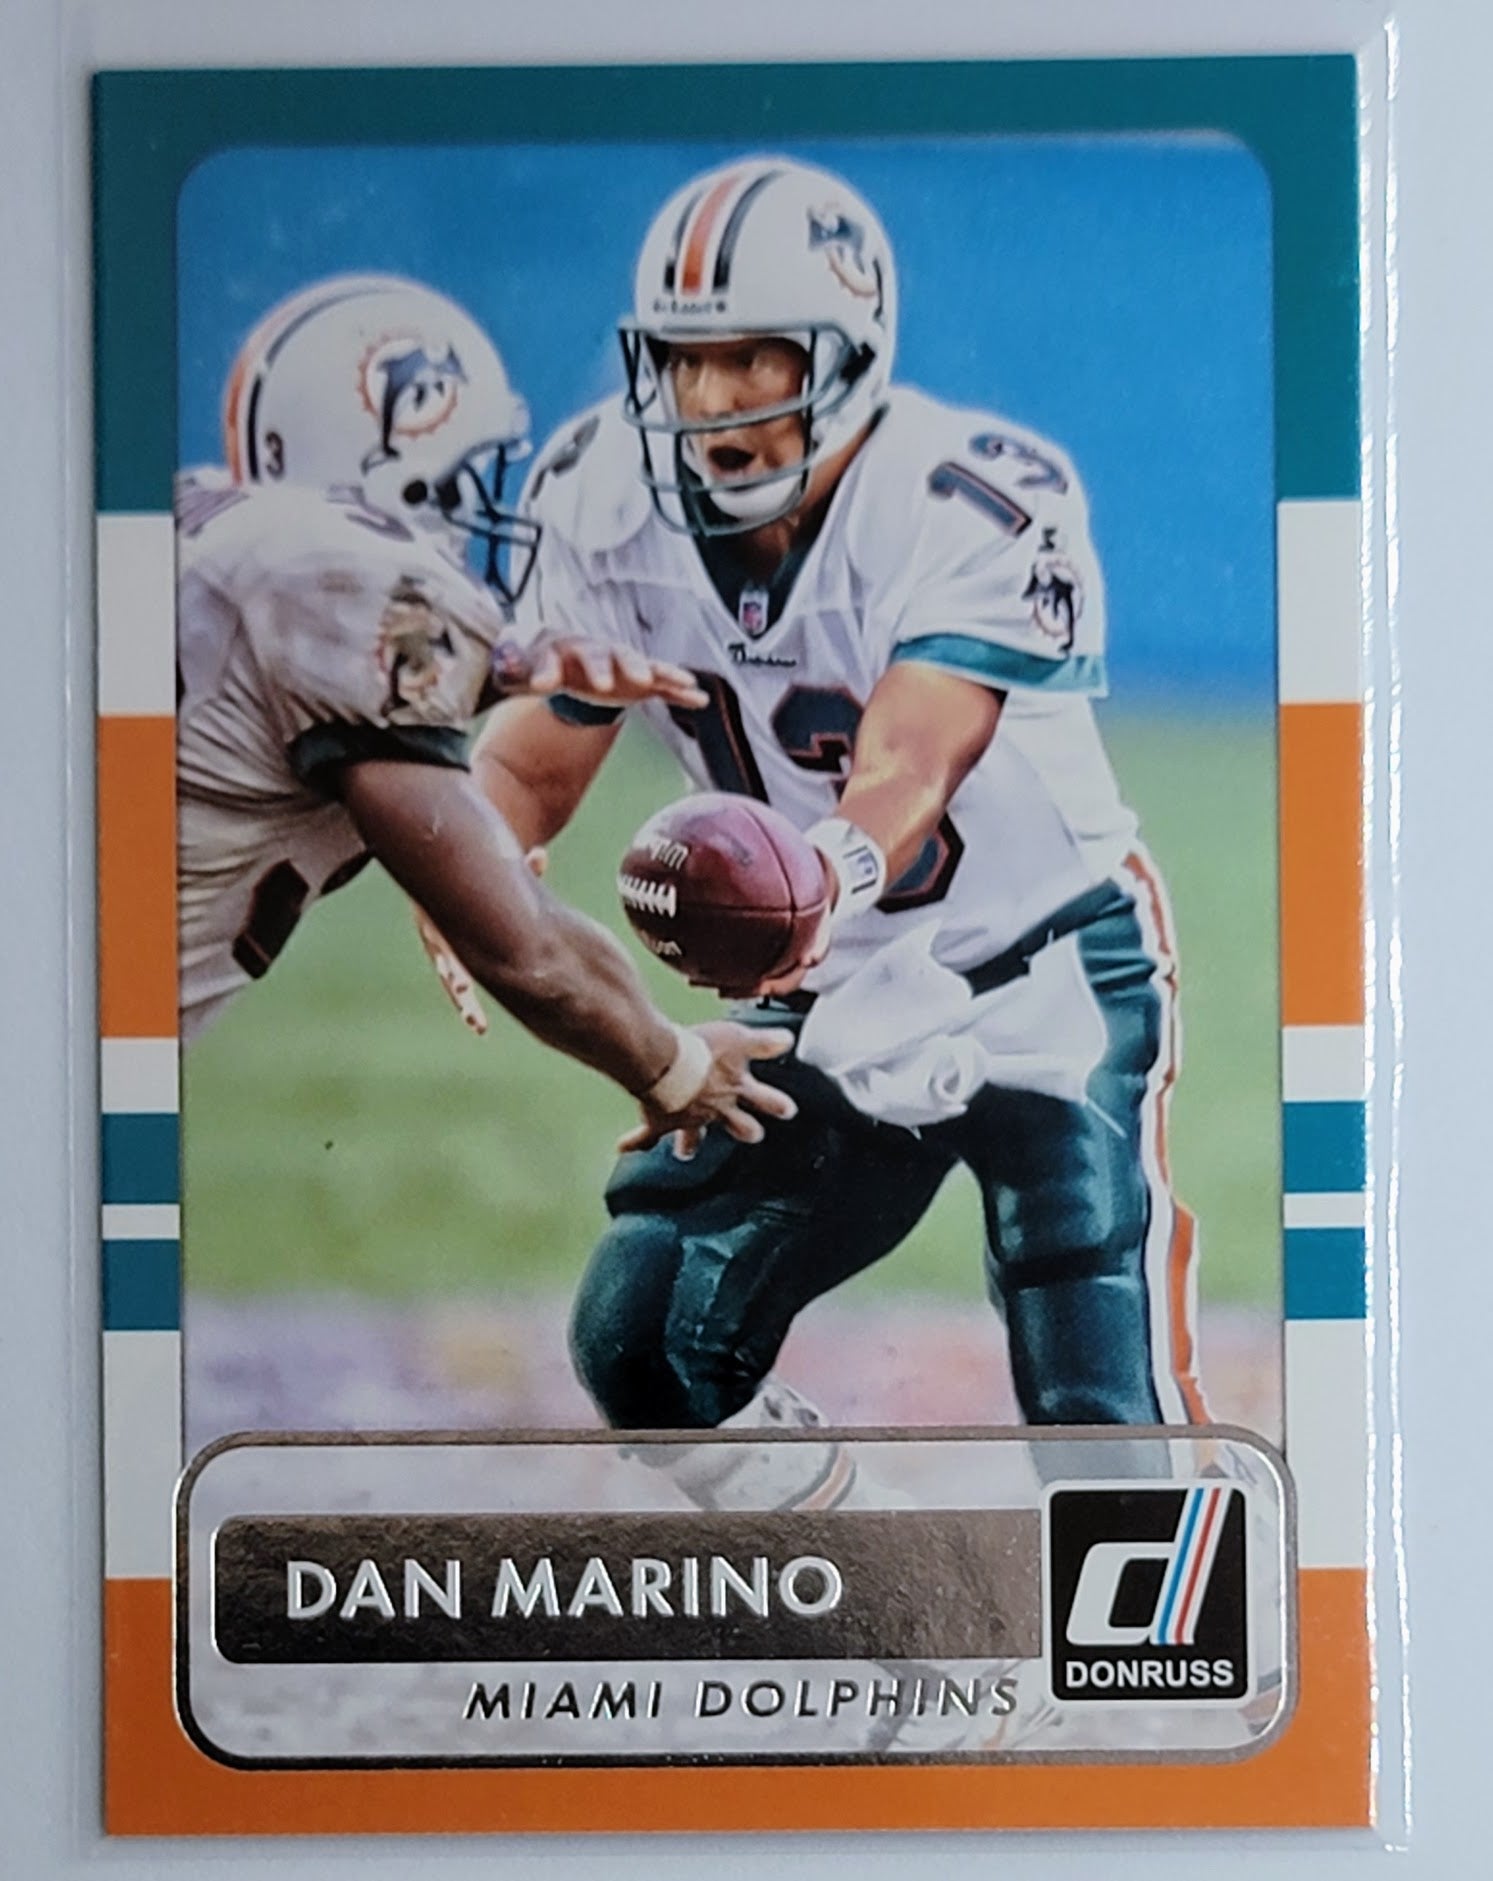 2015 Donruss Dan Marino   Miami Dolphins Football Card  TH1CB simple Xclusive Collectibles   